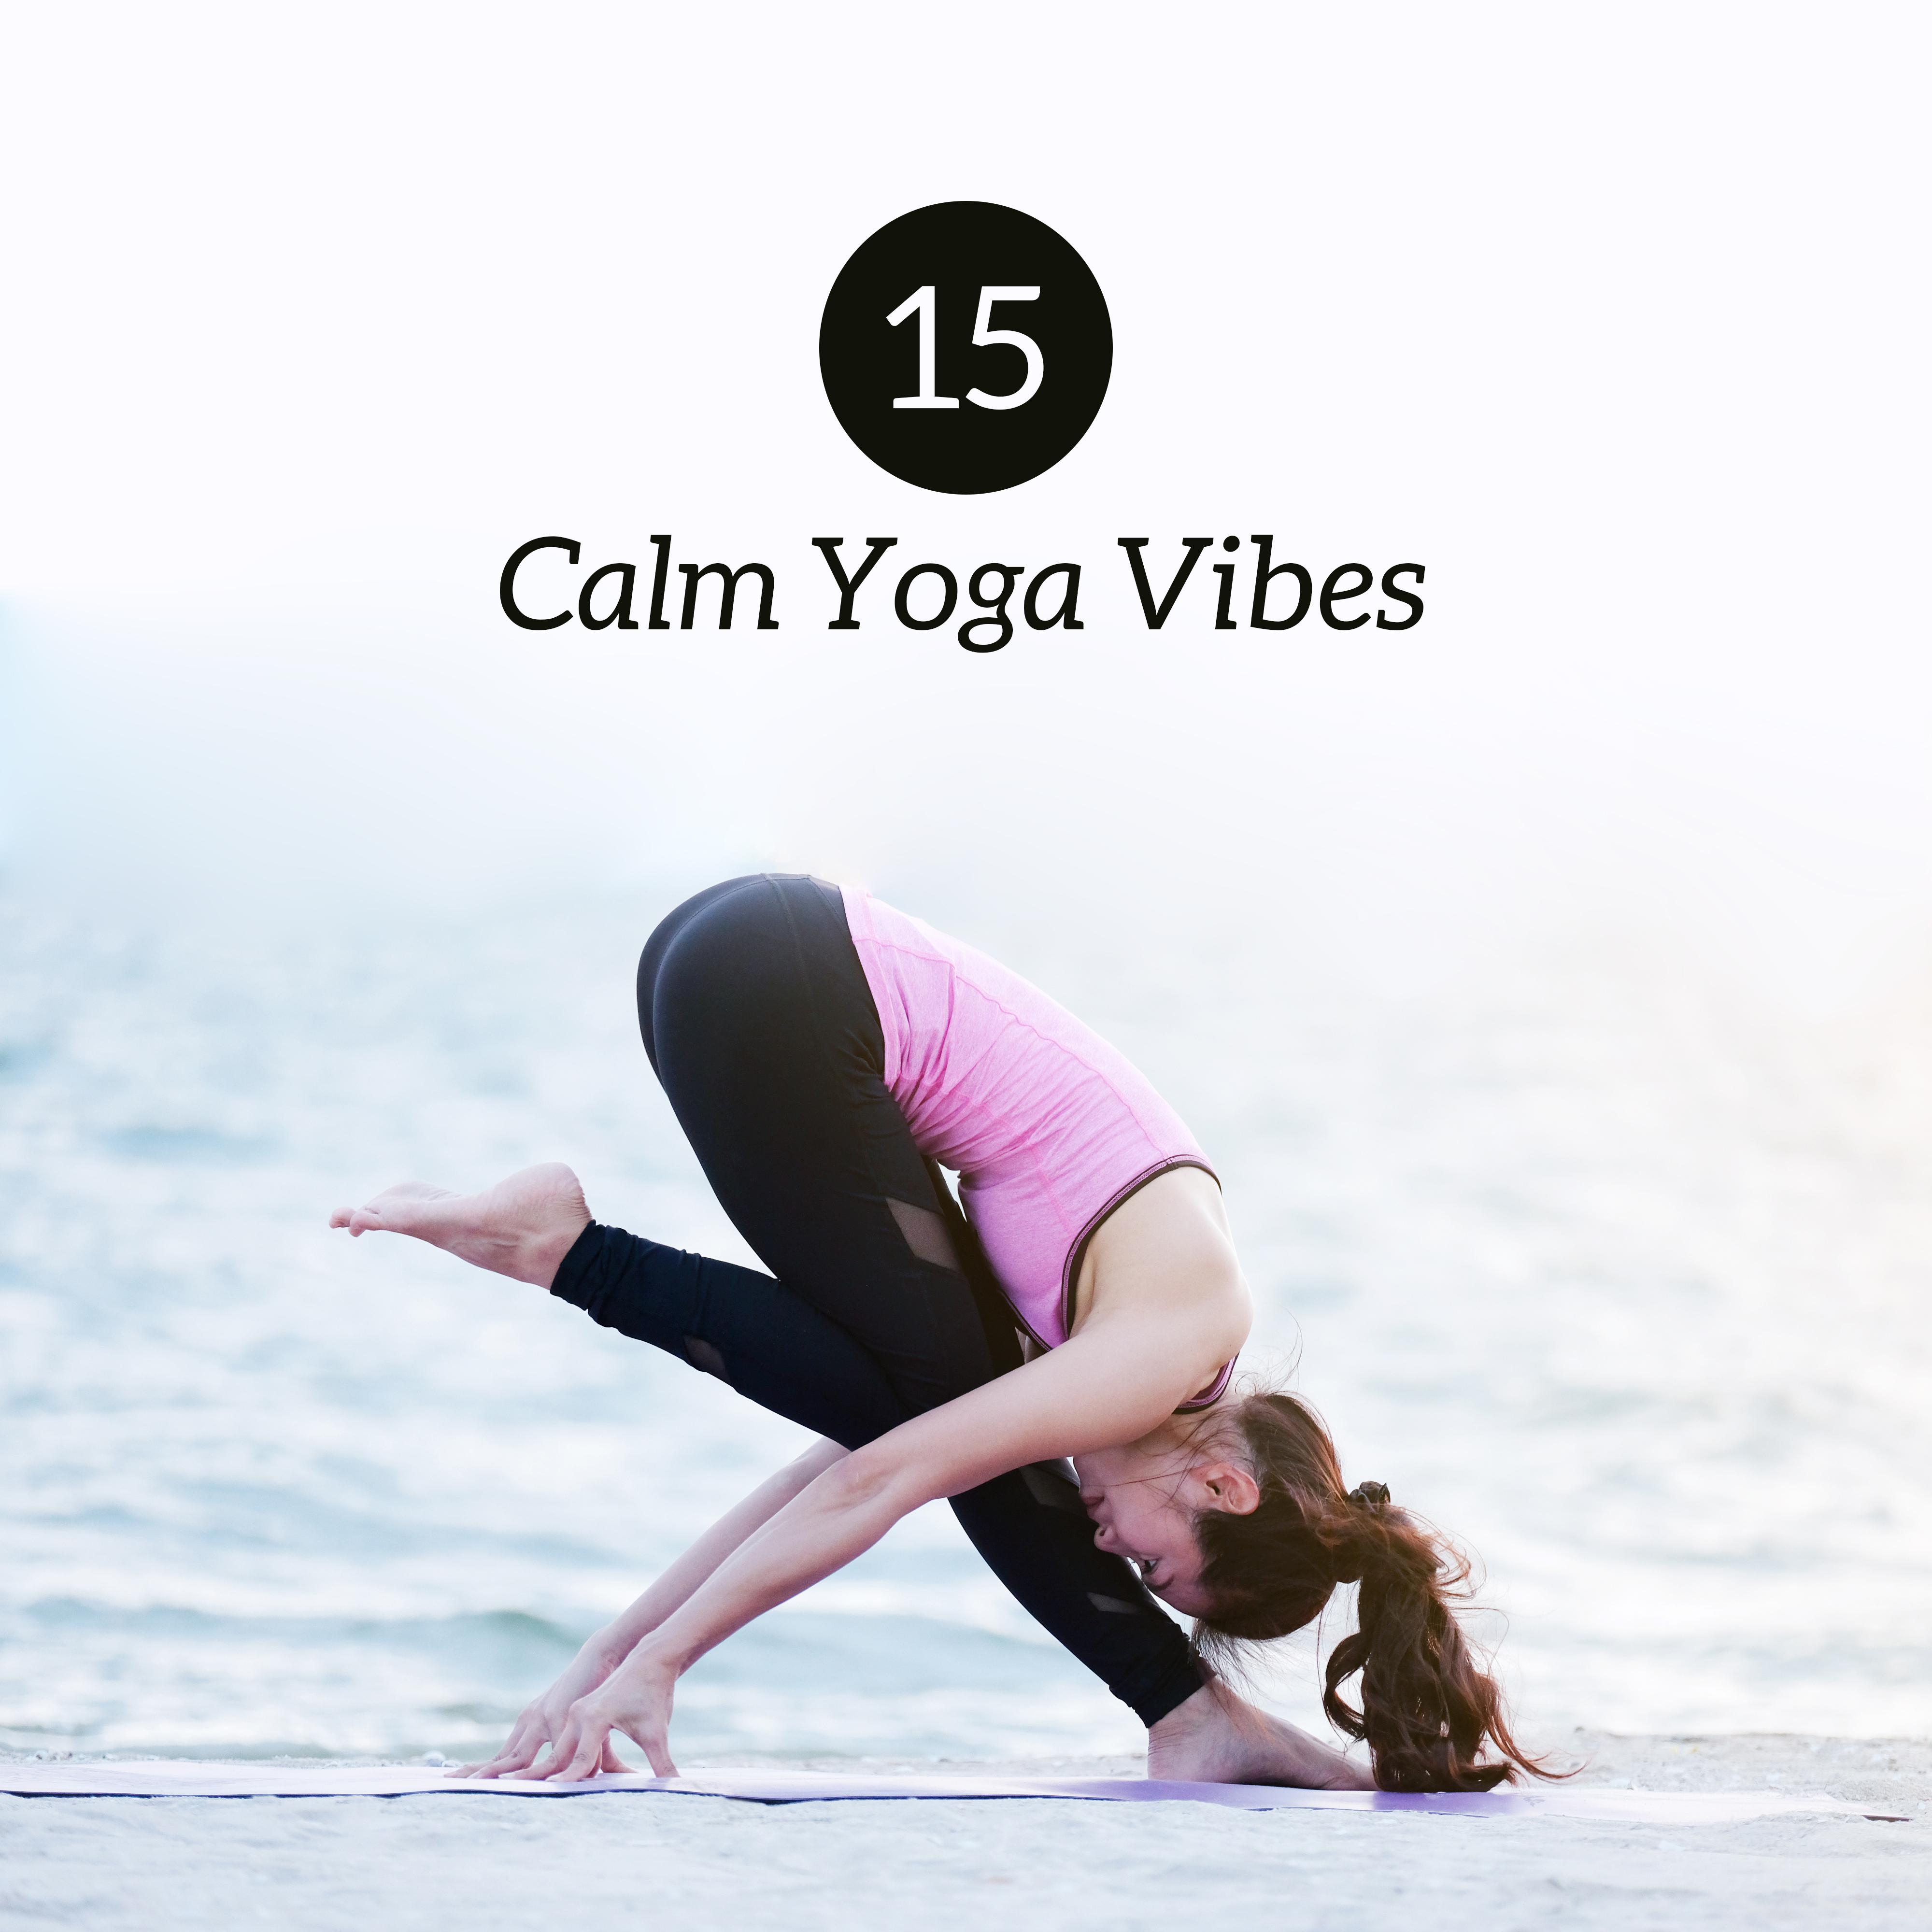 15 Calm Yoga Vibes